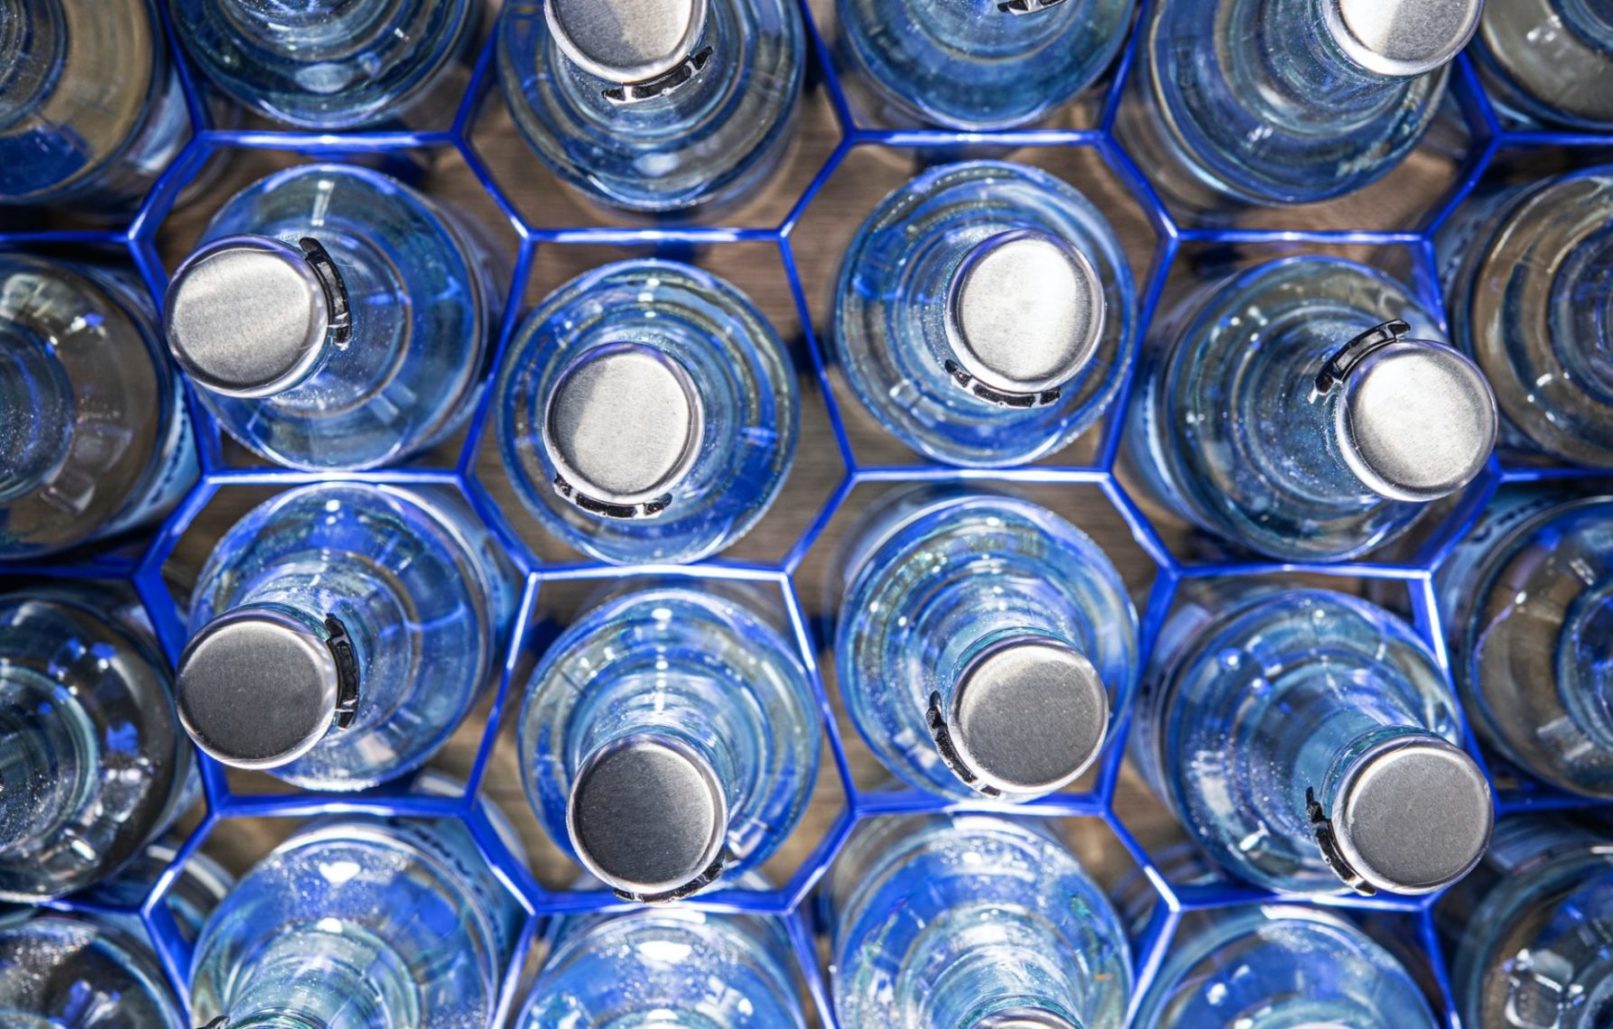 Clear Glass Water Bottles In Holders.